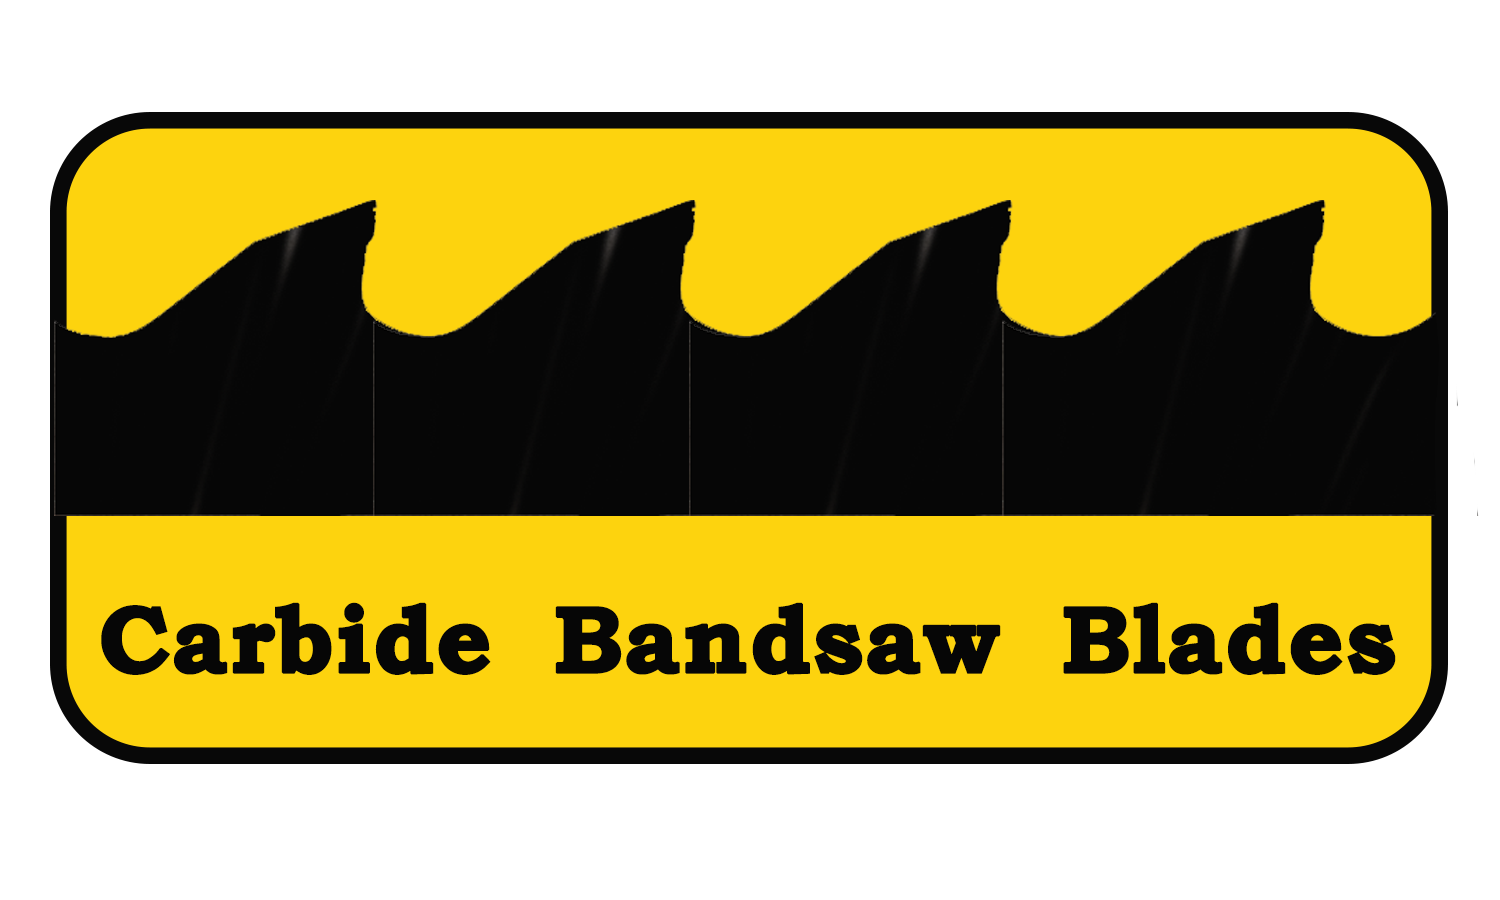 Carbide Bandsaw Blade  Alkem Industrial Supplies Bandsaw Blades spcialist in Brisbane Queensland Australia Engineering supplies Tools